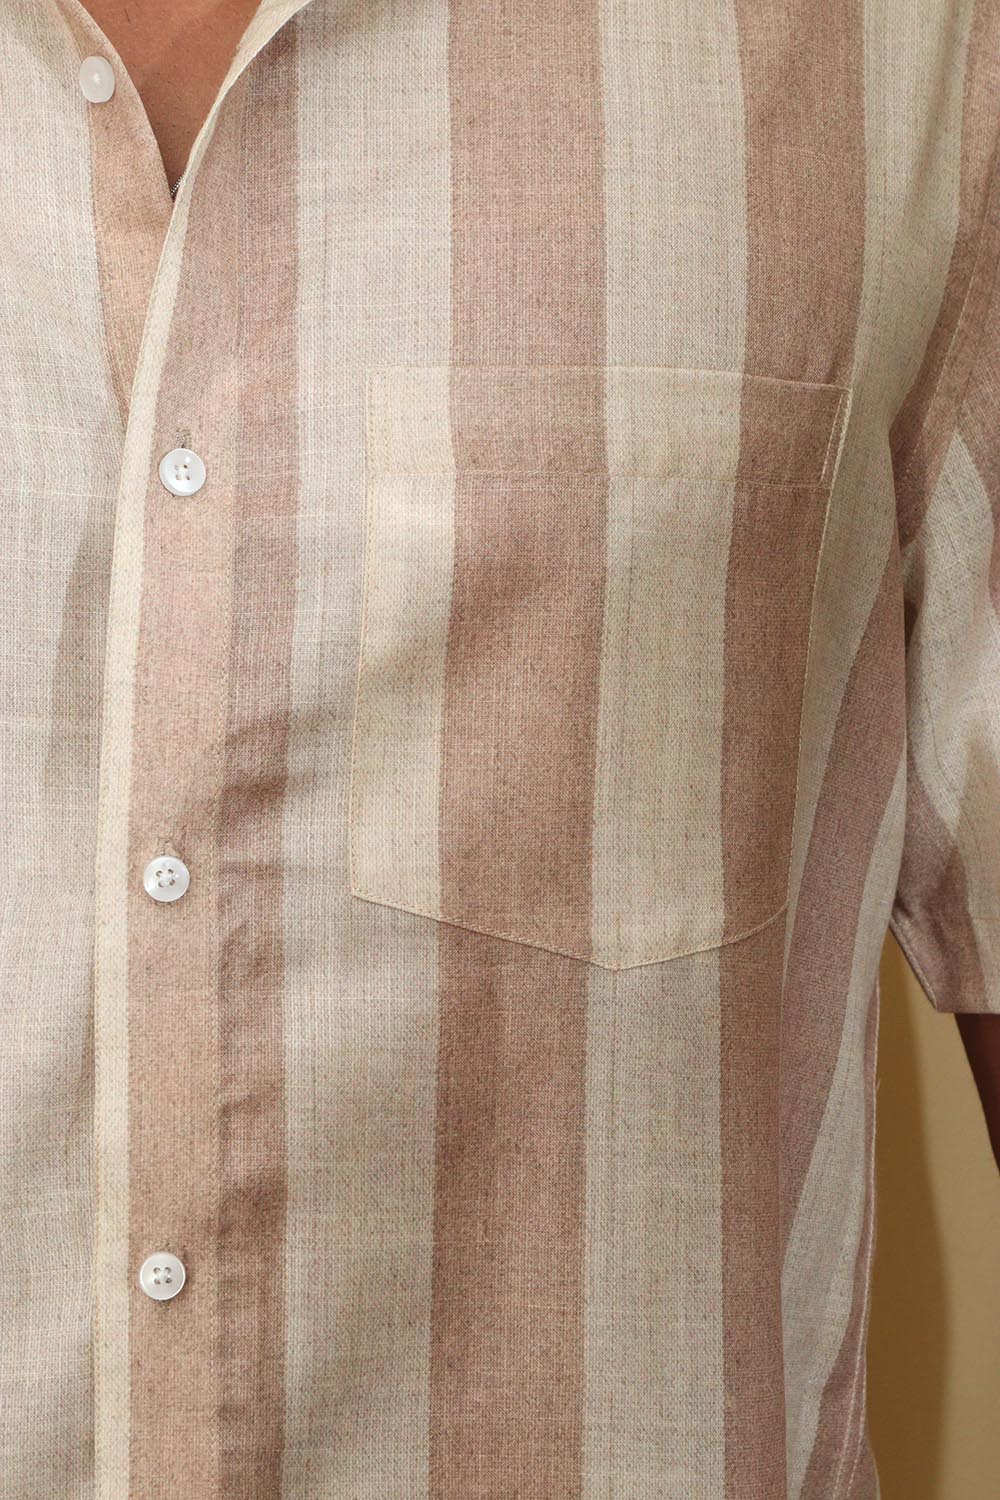 Pastel Wrinkle Free Cotton Linen Digital Printed Shirt - Luxurion World